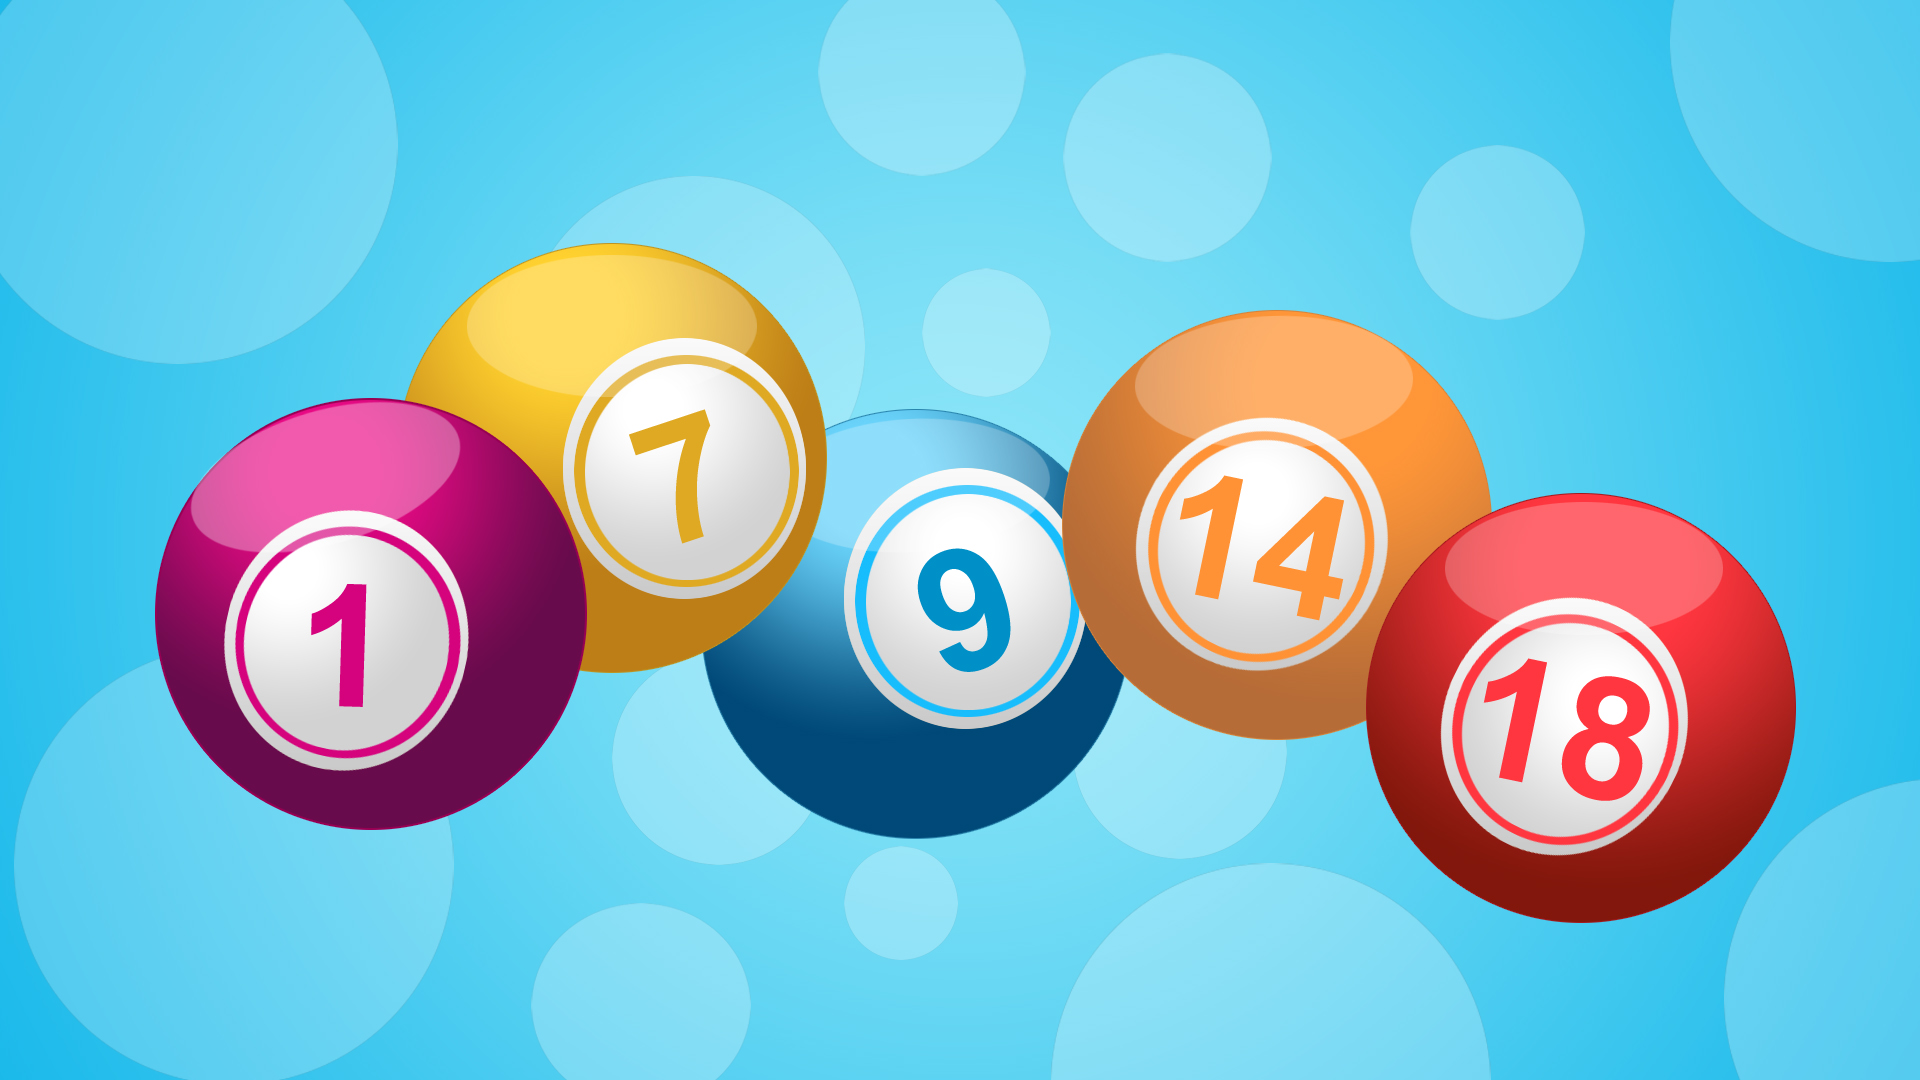 Free Bingo Balls Download Free Bingo Balls Png Images Free ClipArts 